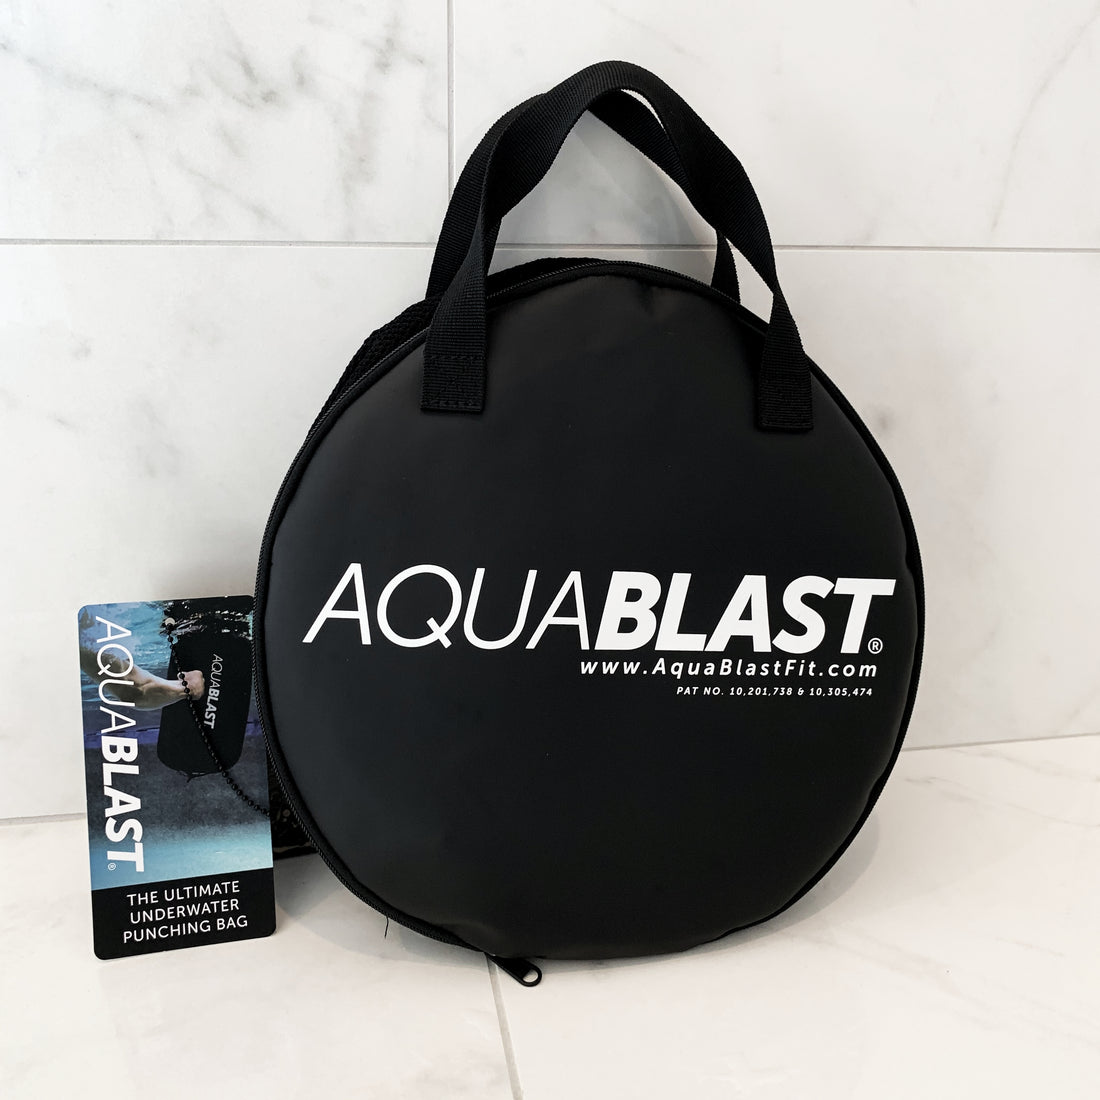 AquaBLAST, the portable Aqua-Gym in a Bag